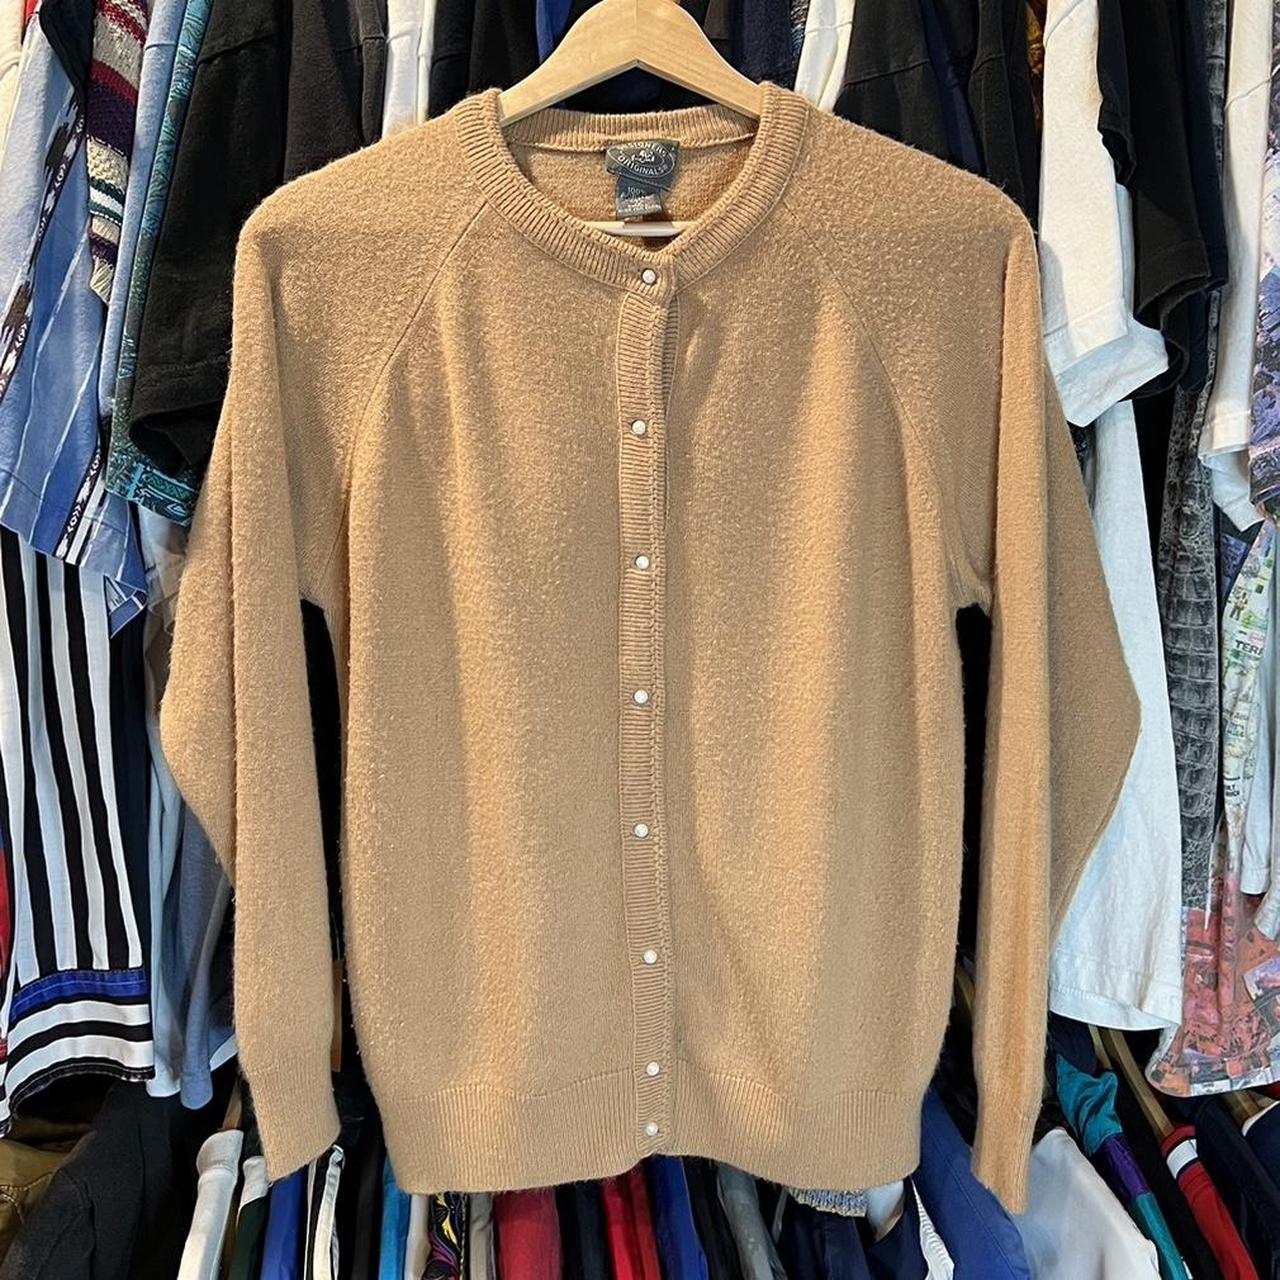 Vintage 90s Usa Made Cardigan Sweater. Size:... - Depop